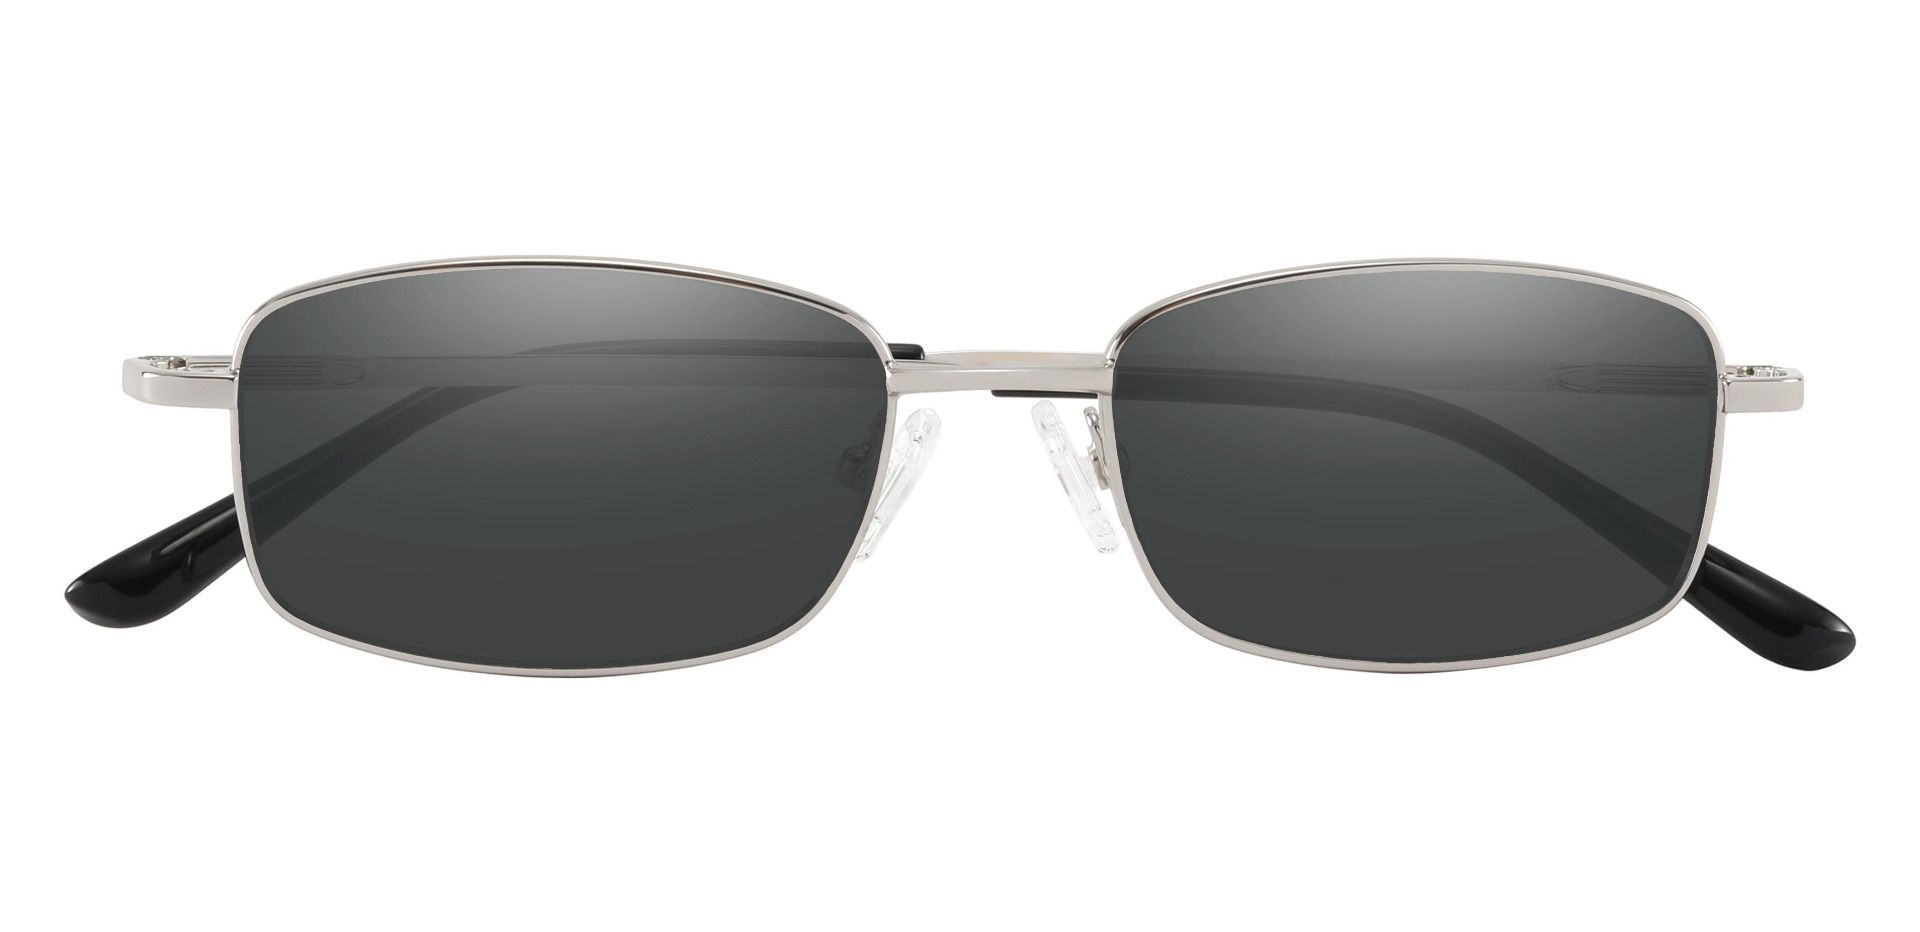 Hellman Rectangle Progressive Sunglasses - Silver Frame With Gray Lenses